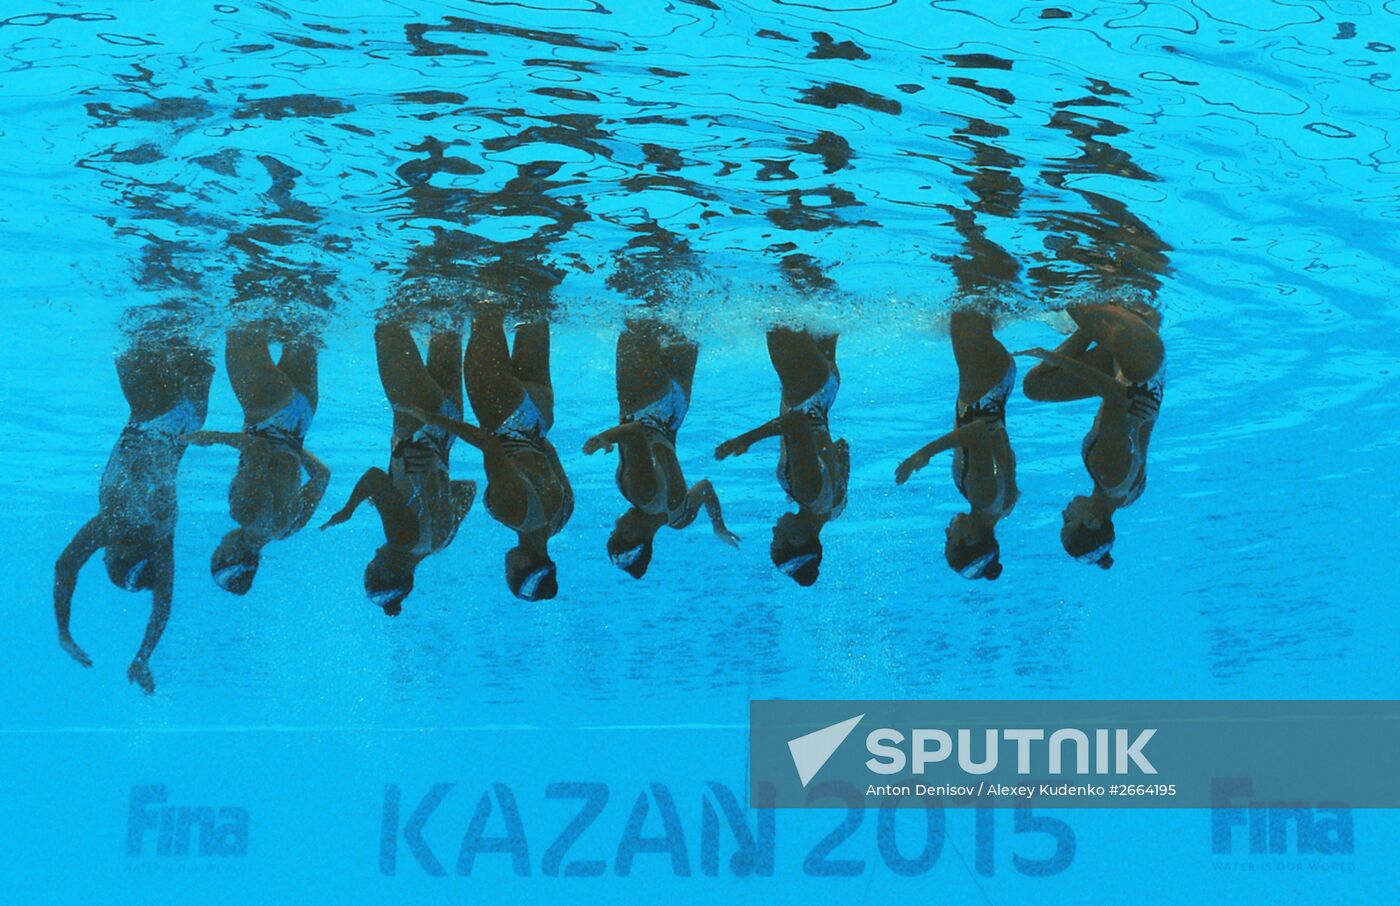 2015 FINA World Championships. Synchronized swimming. Women's team technical. Preliminary round